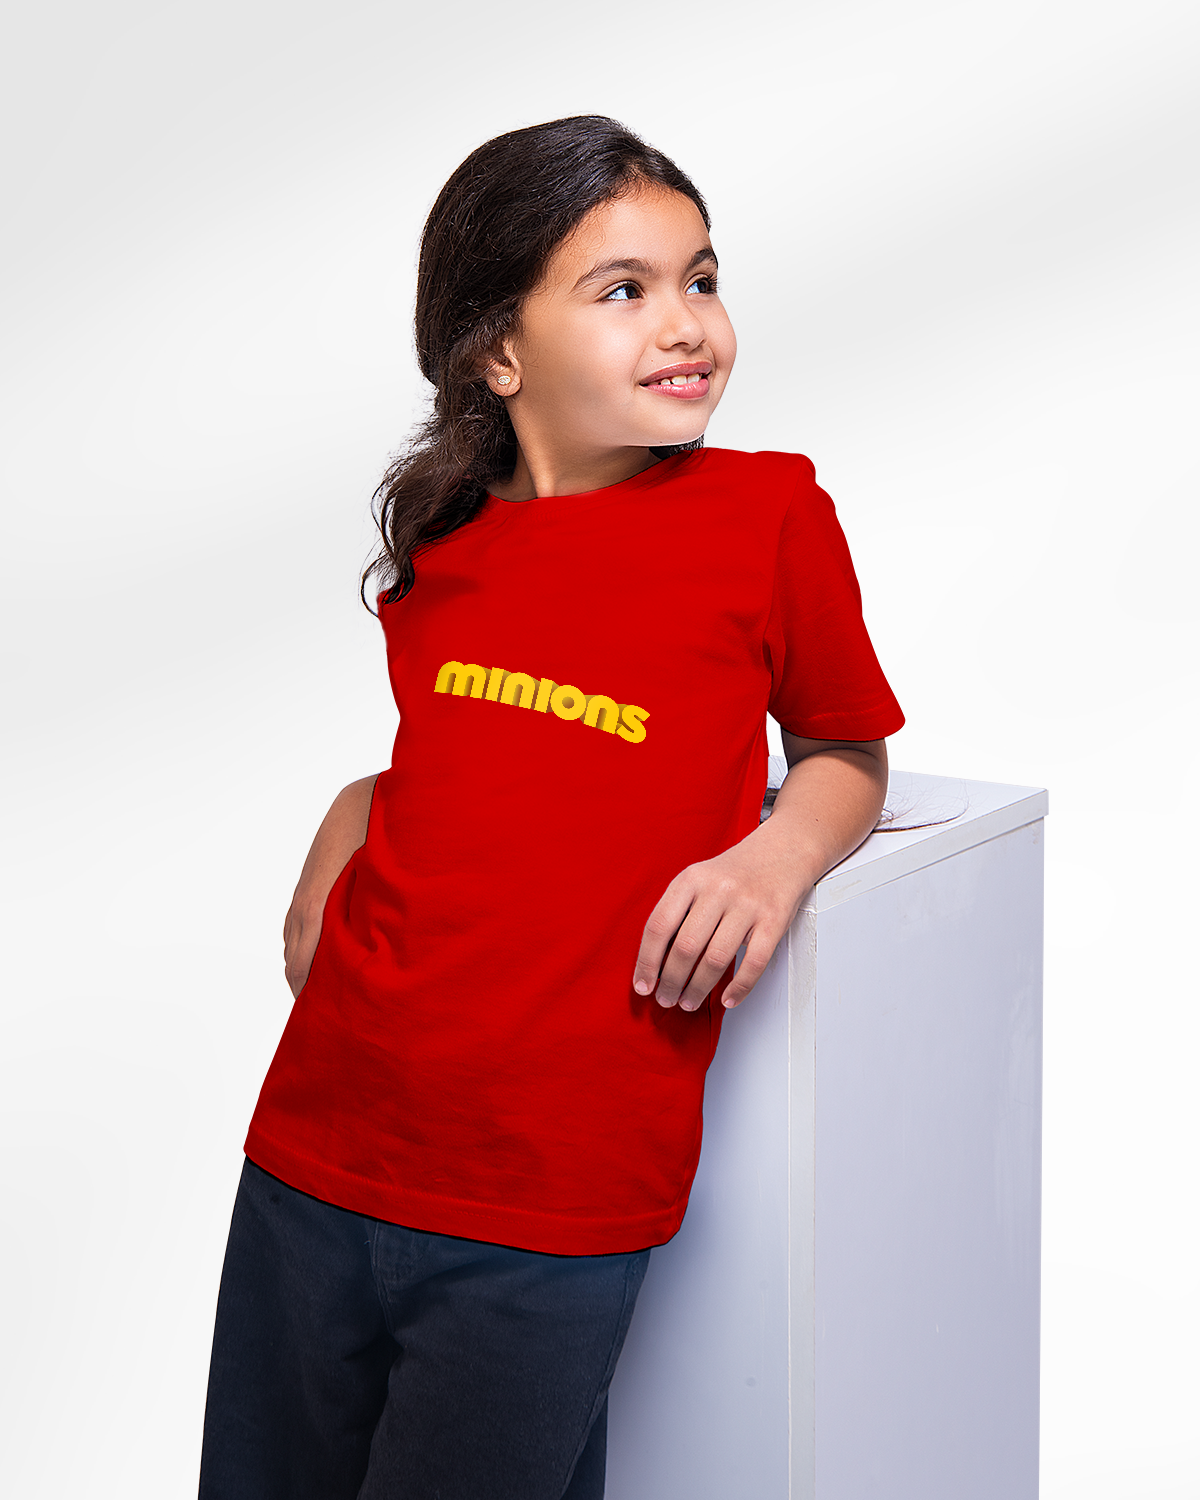 Girls' T-Shirt (Minions)